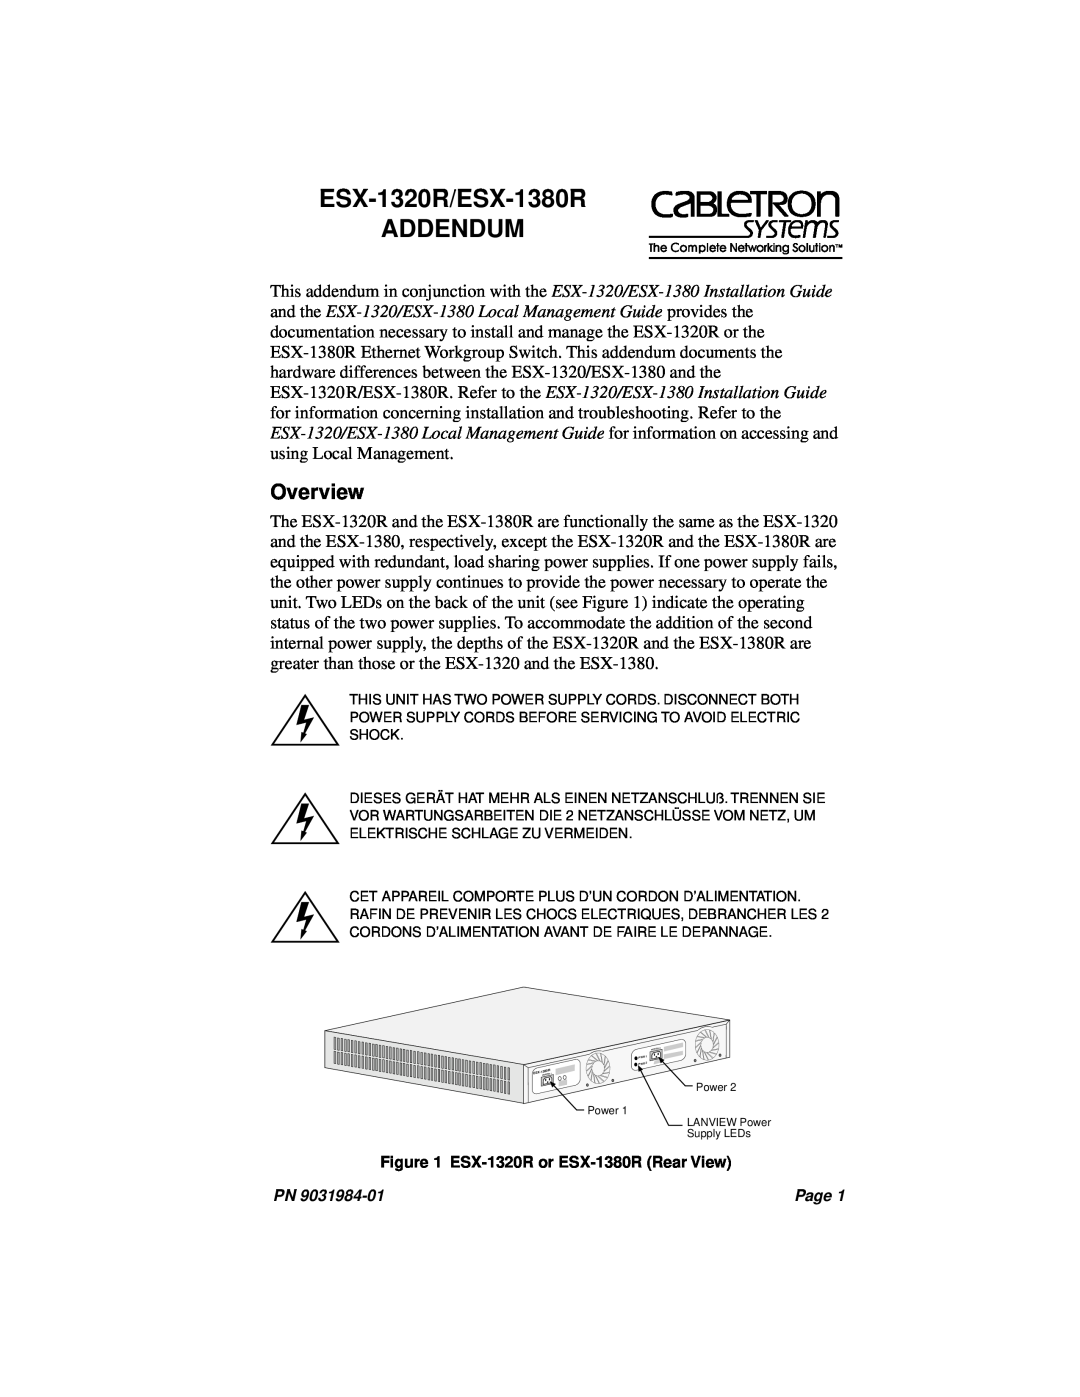 Cabletron Systems manual Overview, ESX-1320R/ESX-1380R ADDENDUM 